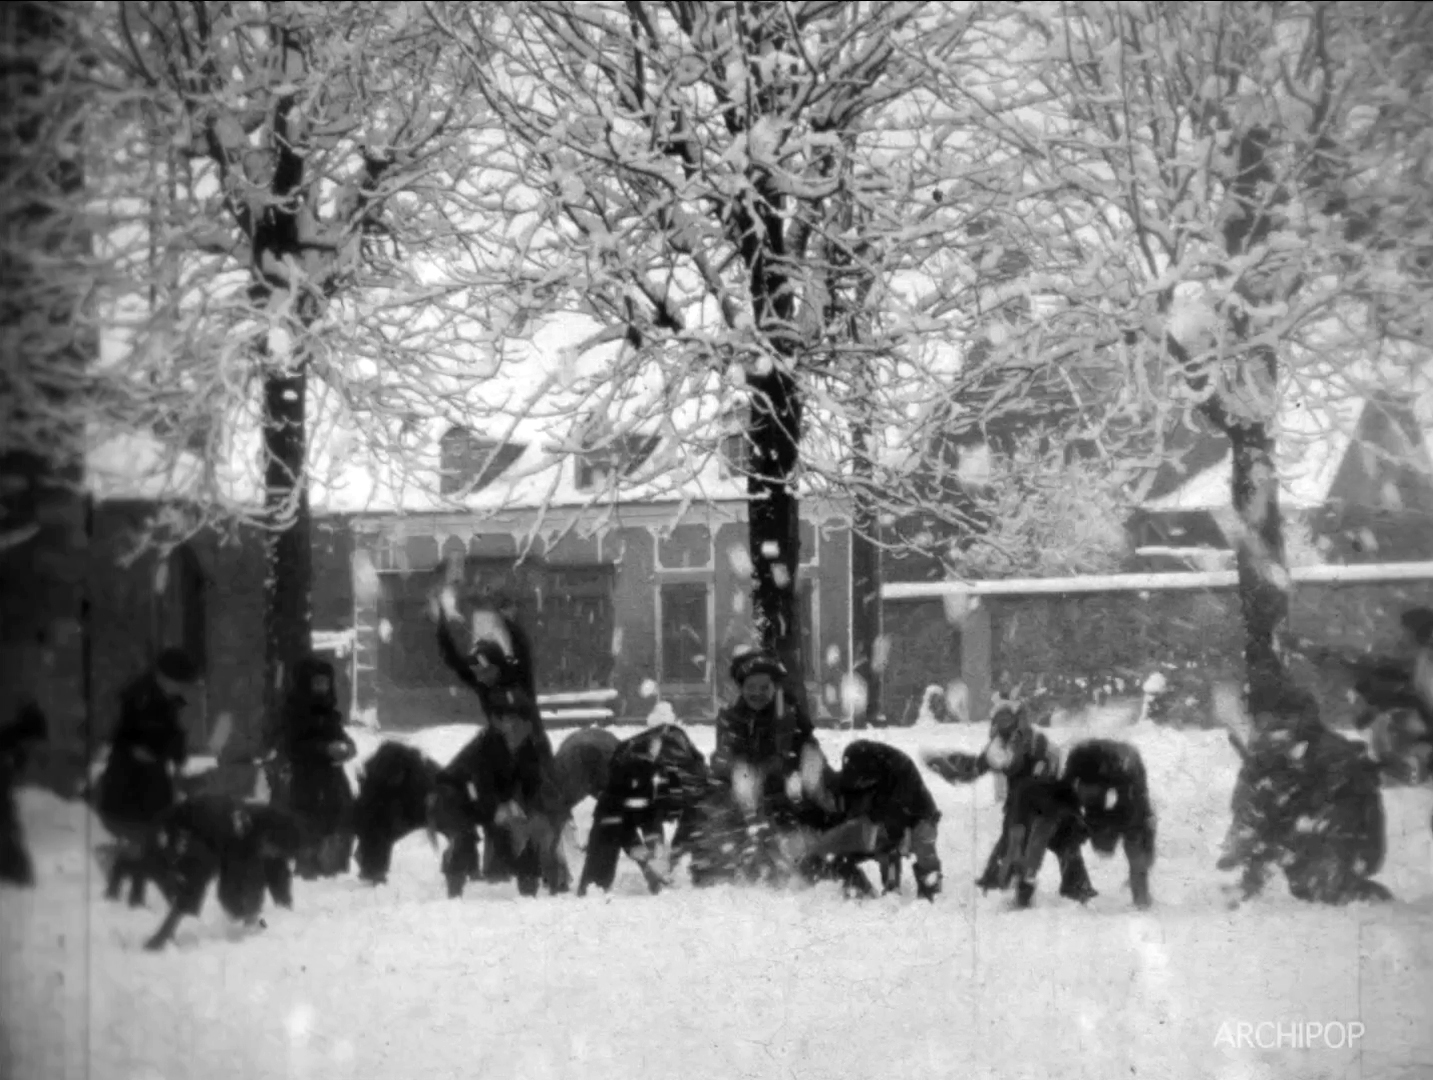 bande d'enfants dans la neige